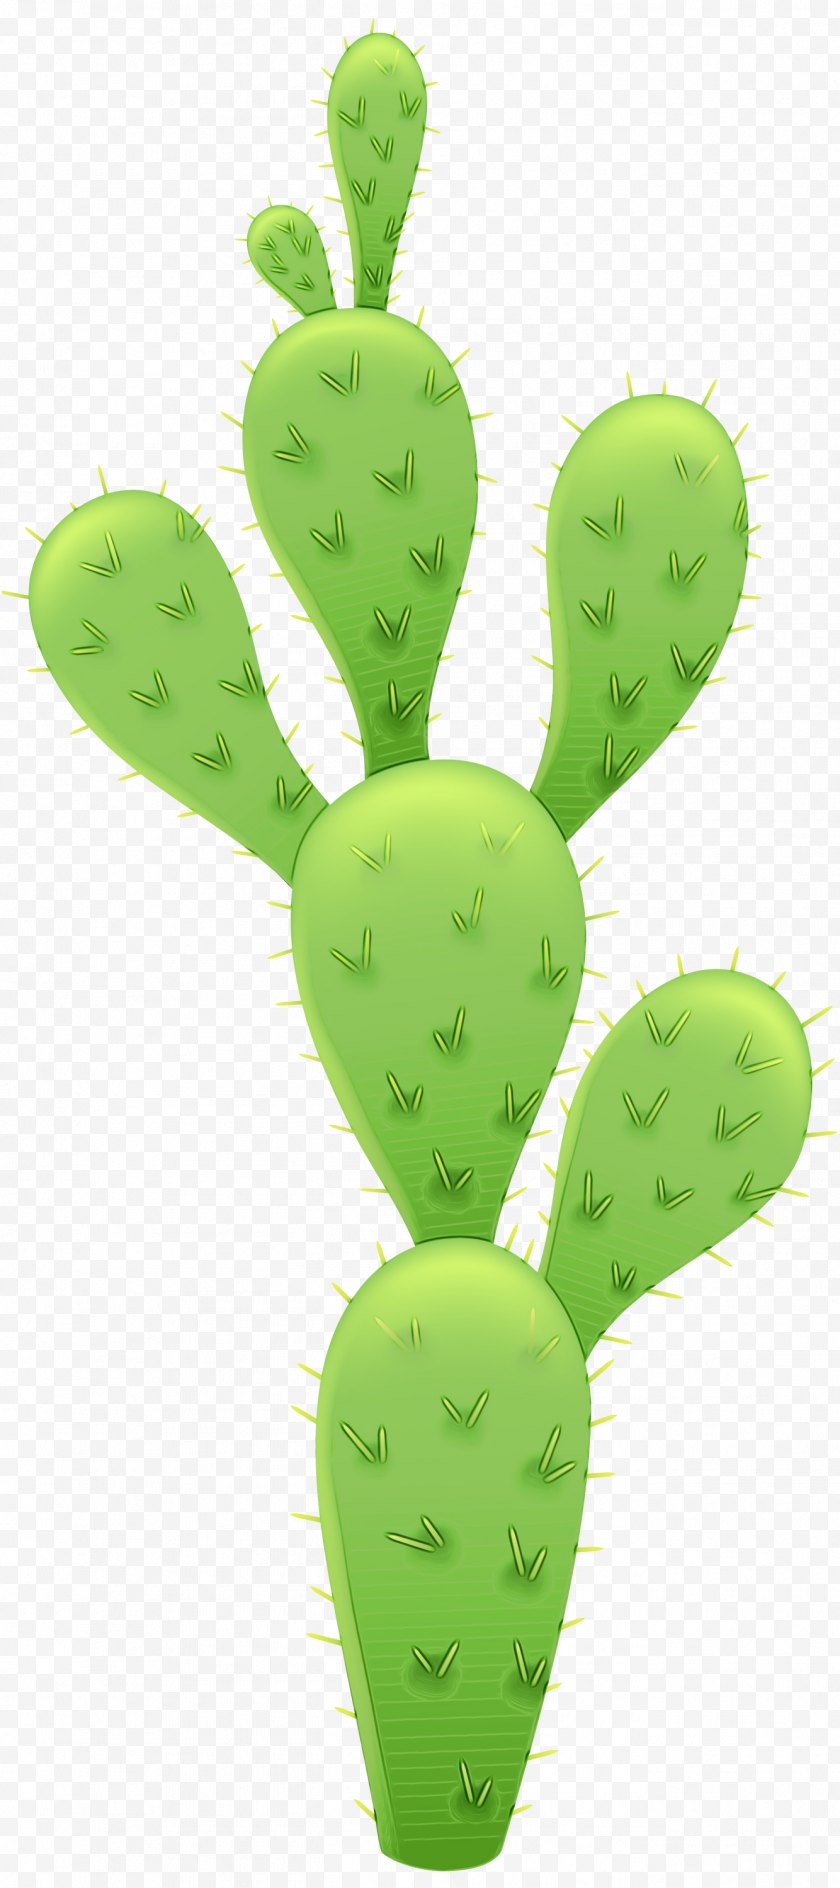 Green - Cereus Repandus - Bunny Ears Cactus Vector Graphics Plants Barbary Fig - Houseplant Free PNG